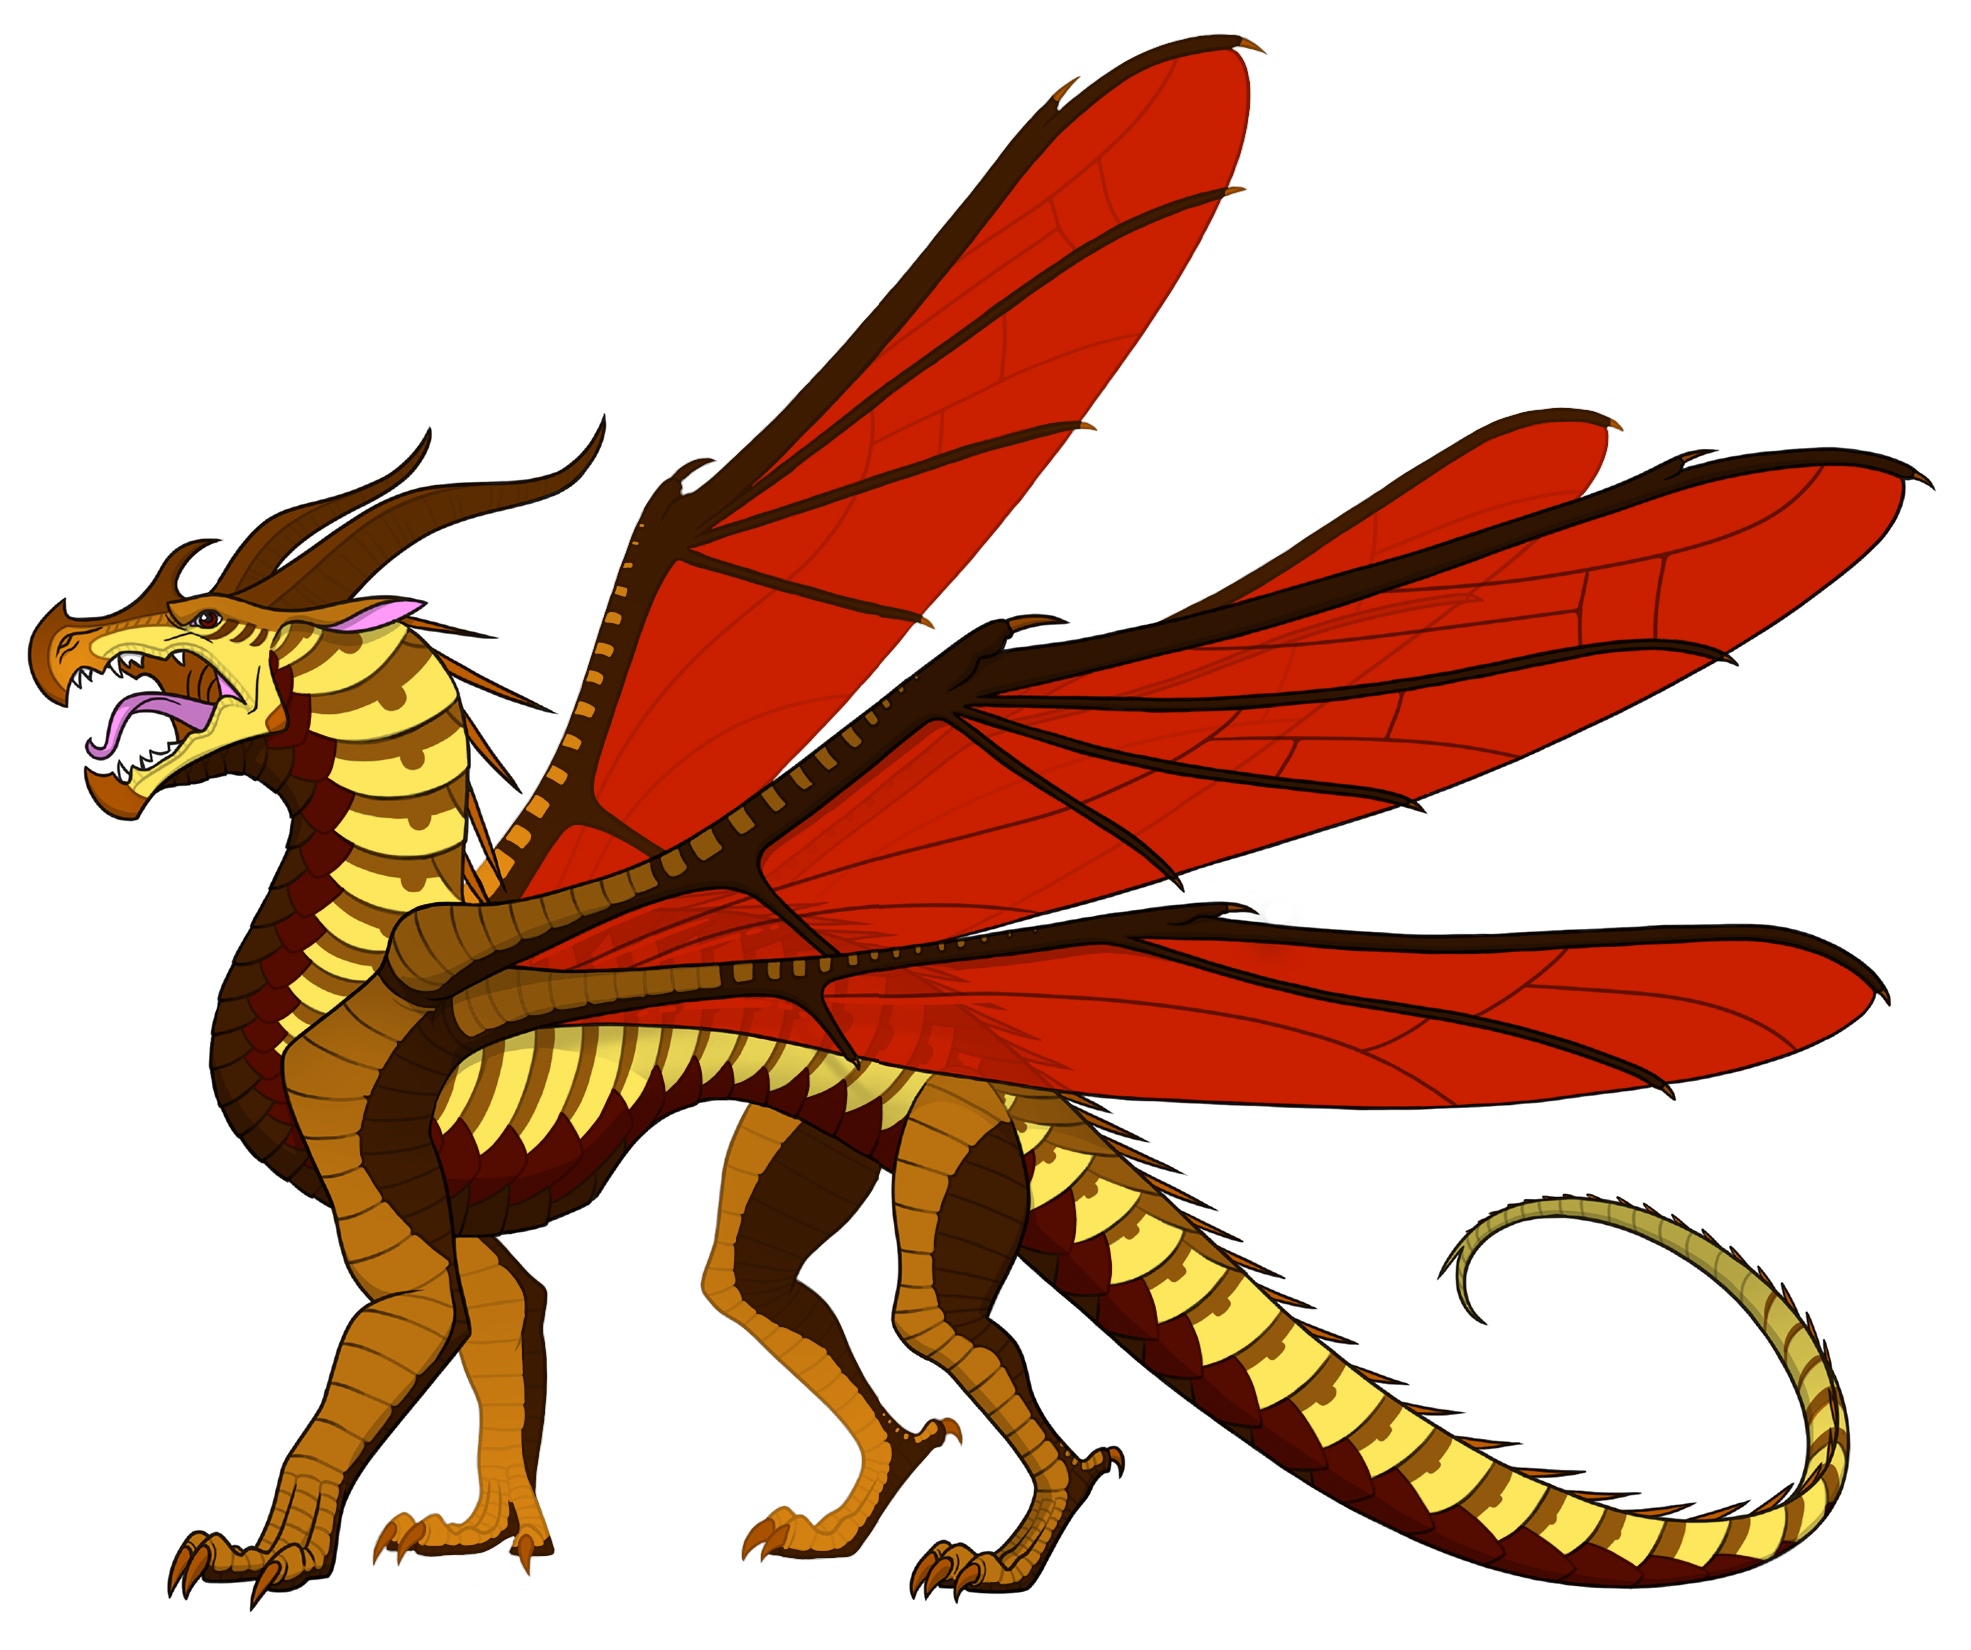 Glitchtrap, Wings of Fire Fanon Wiki